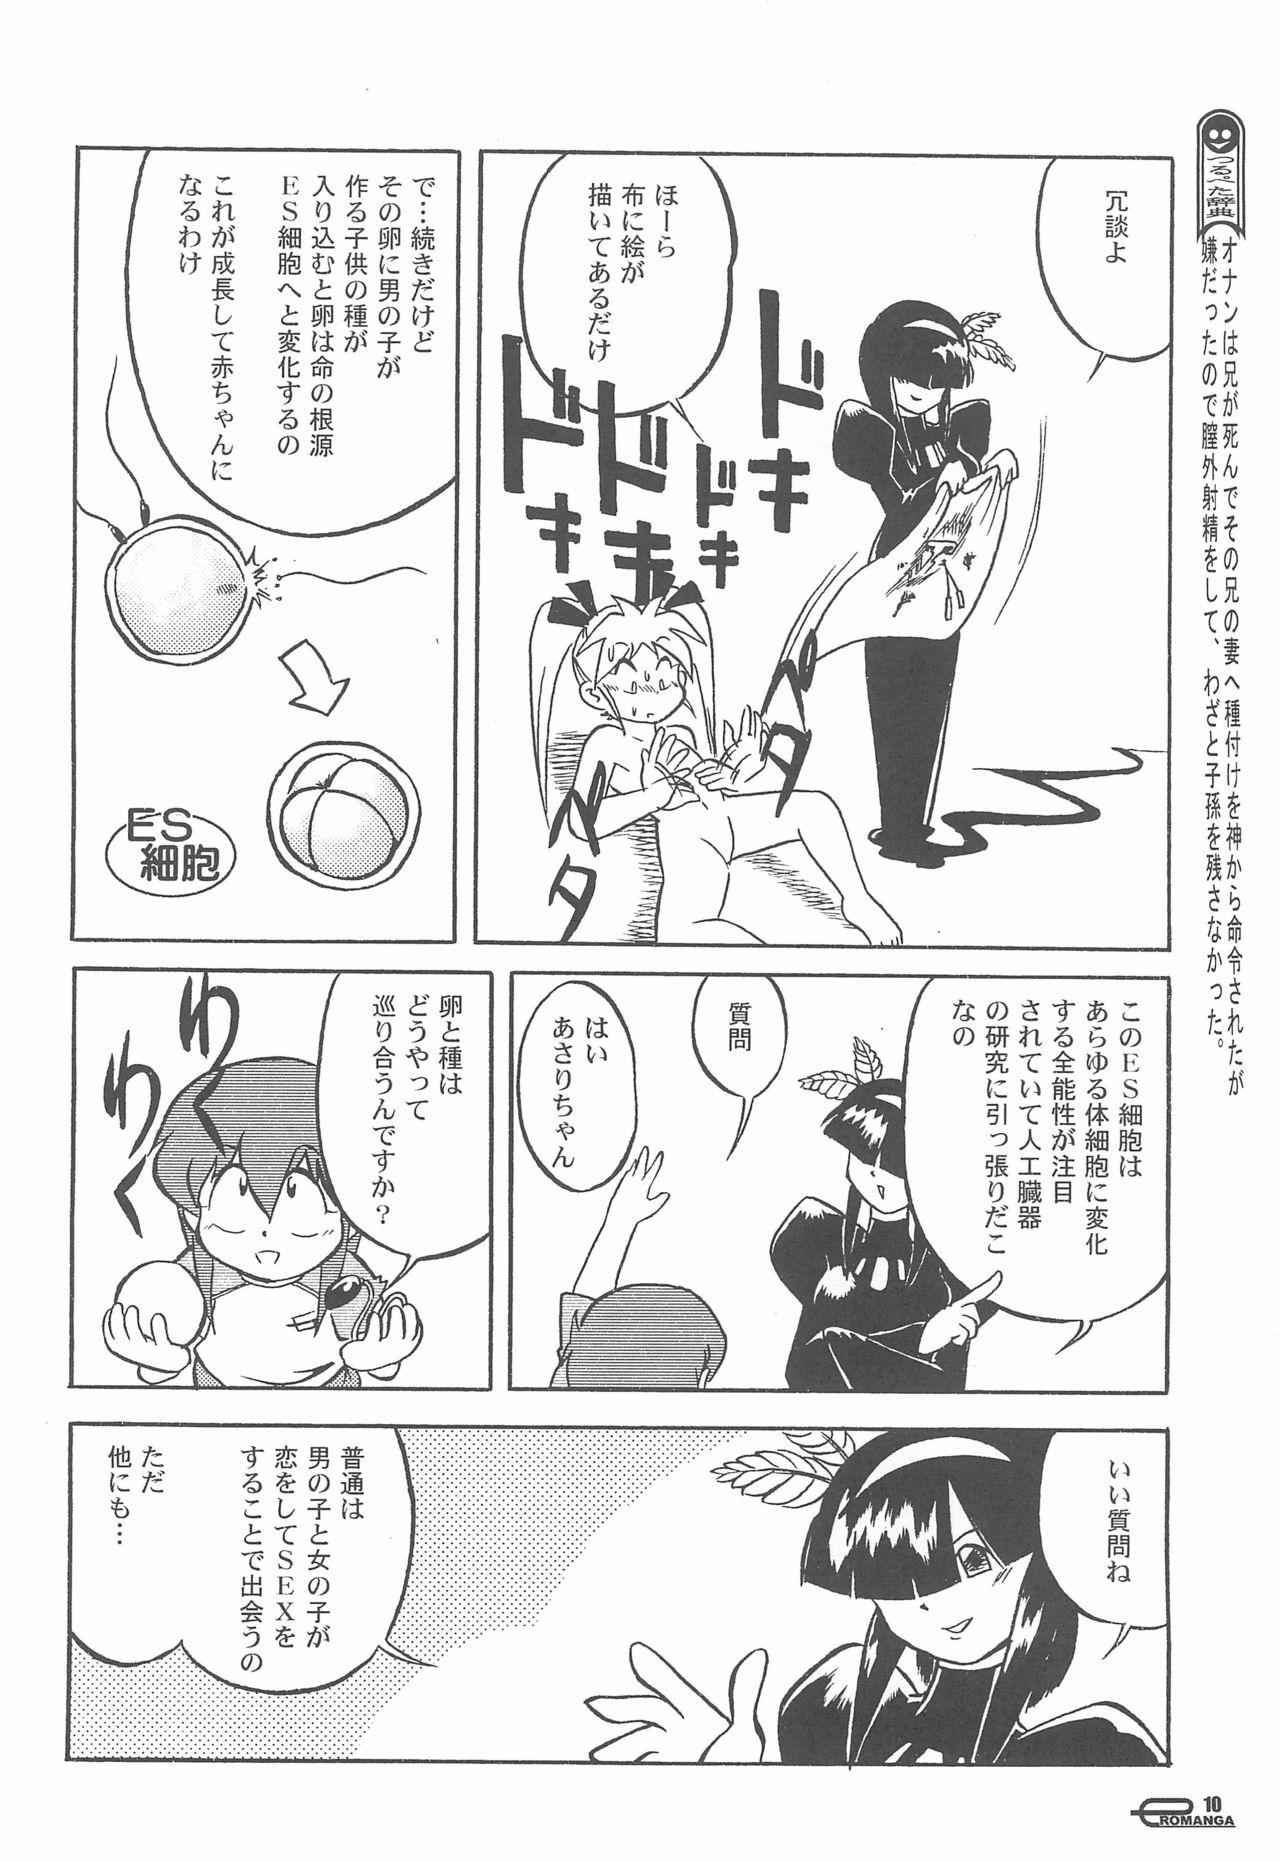 European Manga Science Onna no ko no Himitsu - Manga science Sucking - Page 12